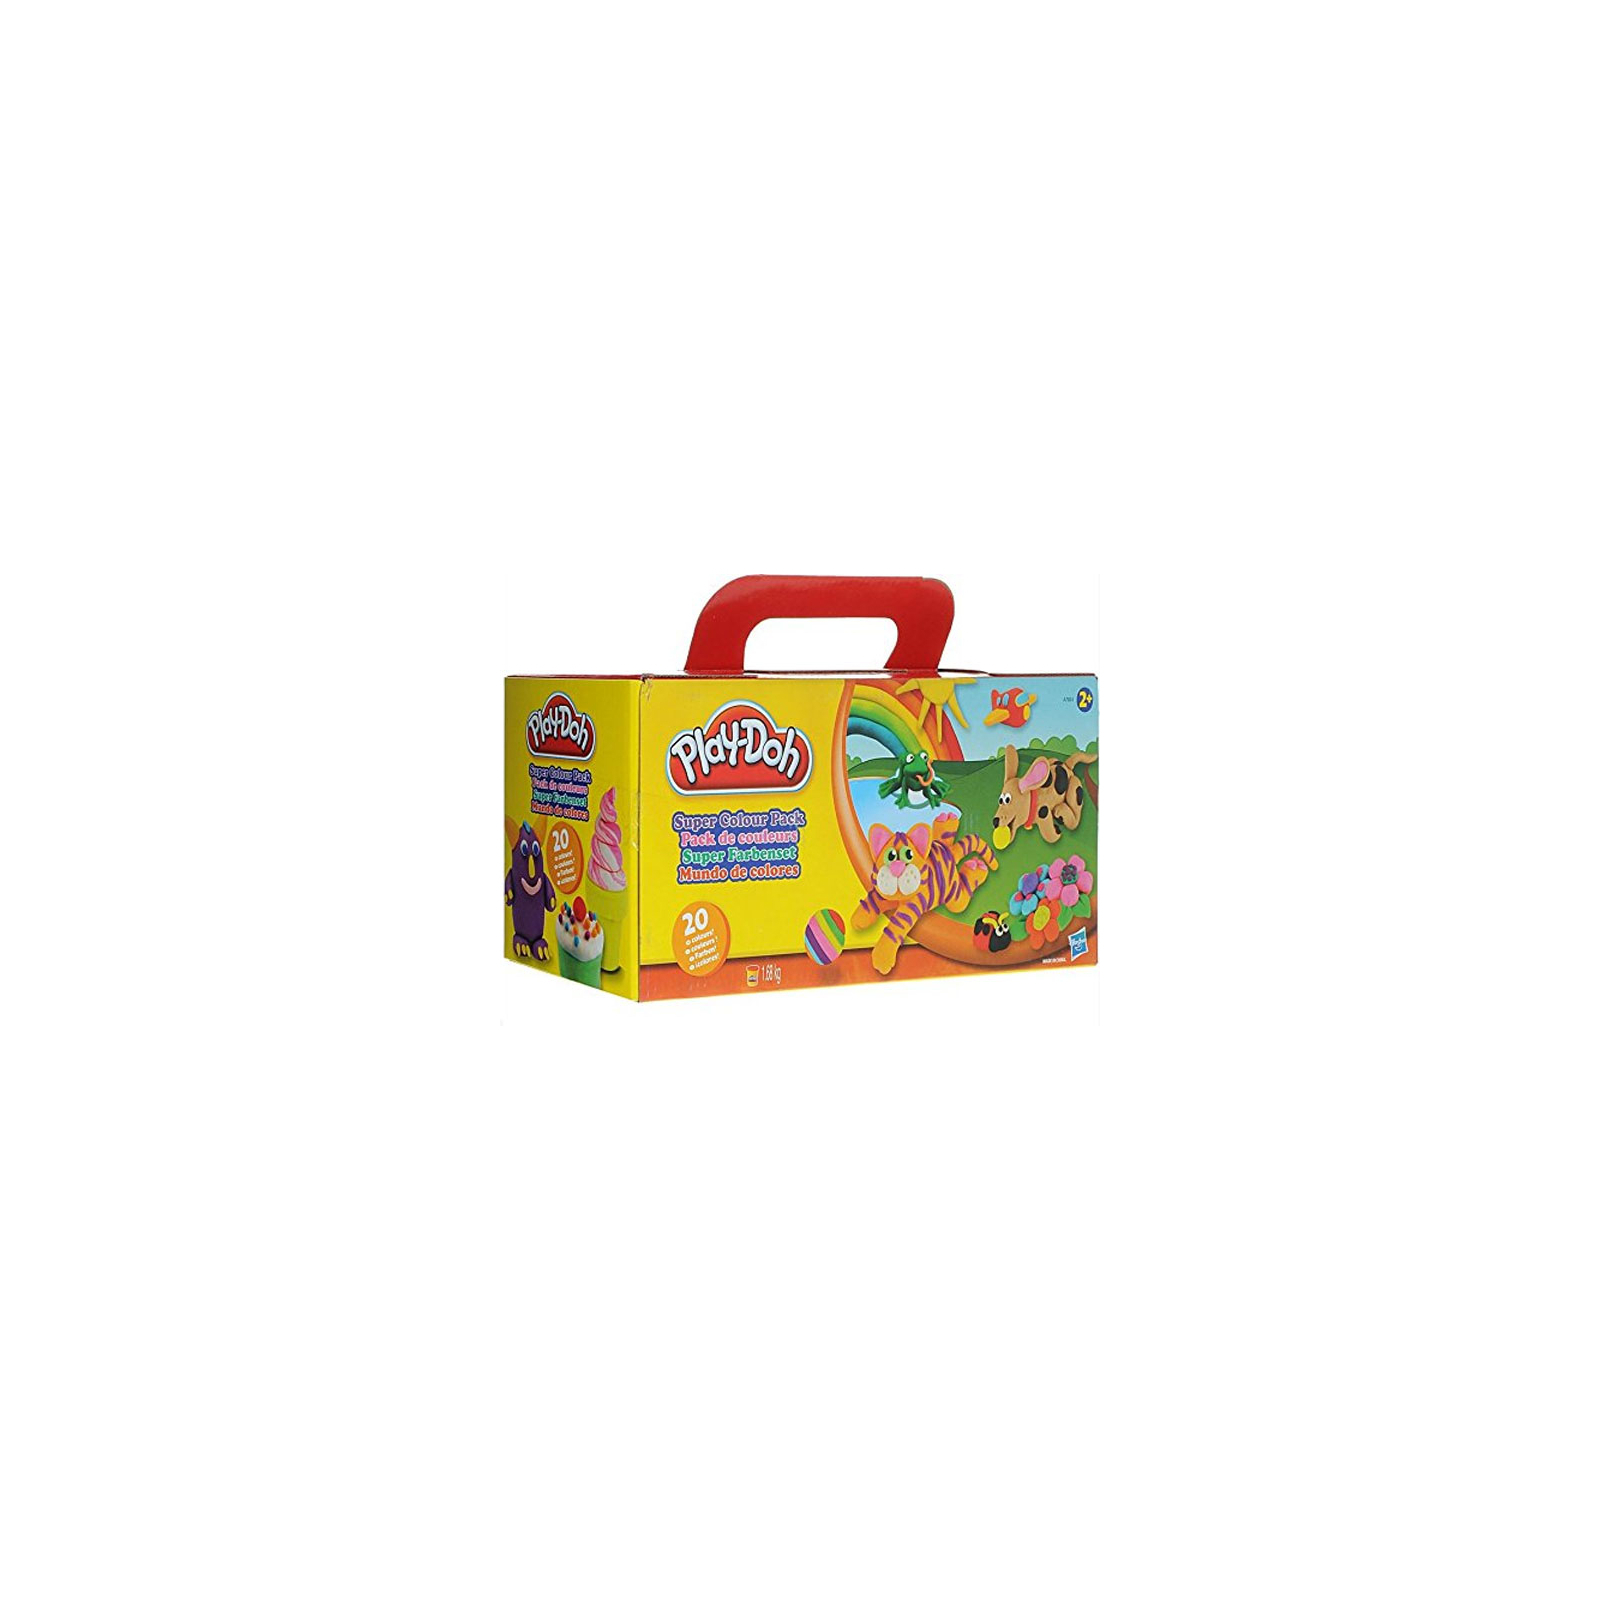 Набор для творчества Hasbro Play-Doh Пластилин 20 баночек (A7924)